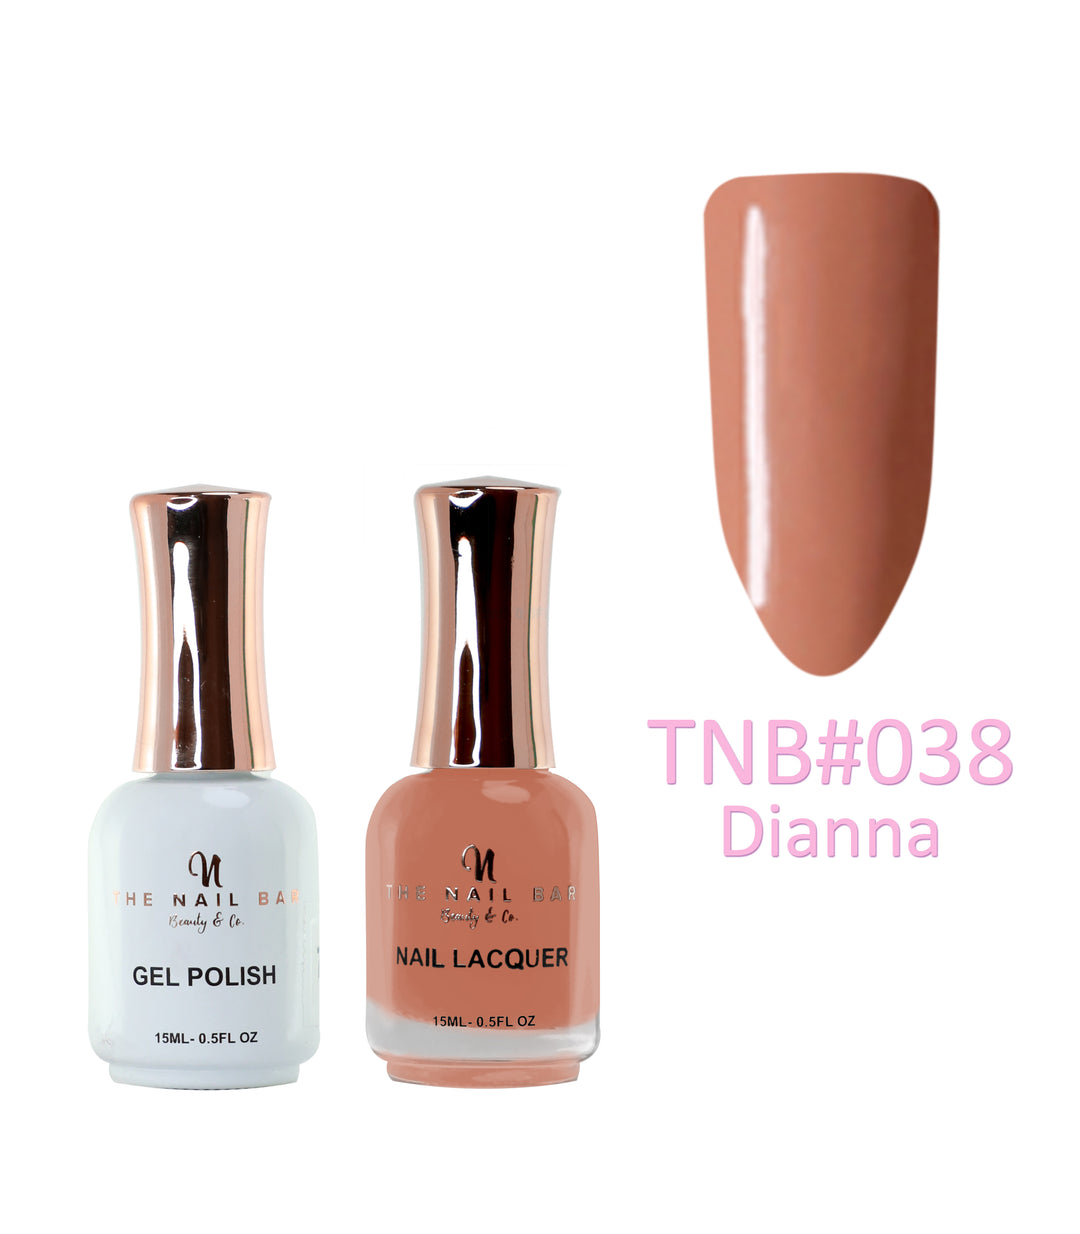 Dual Polish/Gel colour matching (15ml) - Dianna - The Nail Bar Beauty & Co.